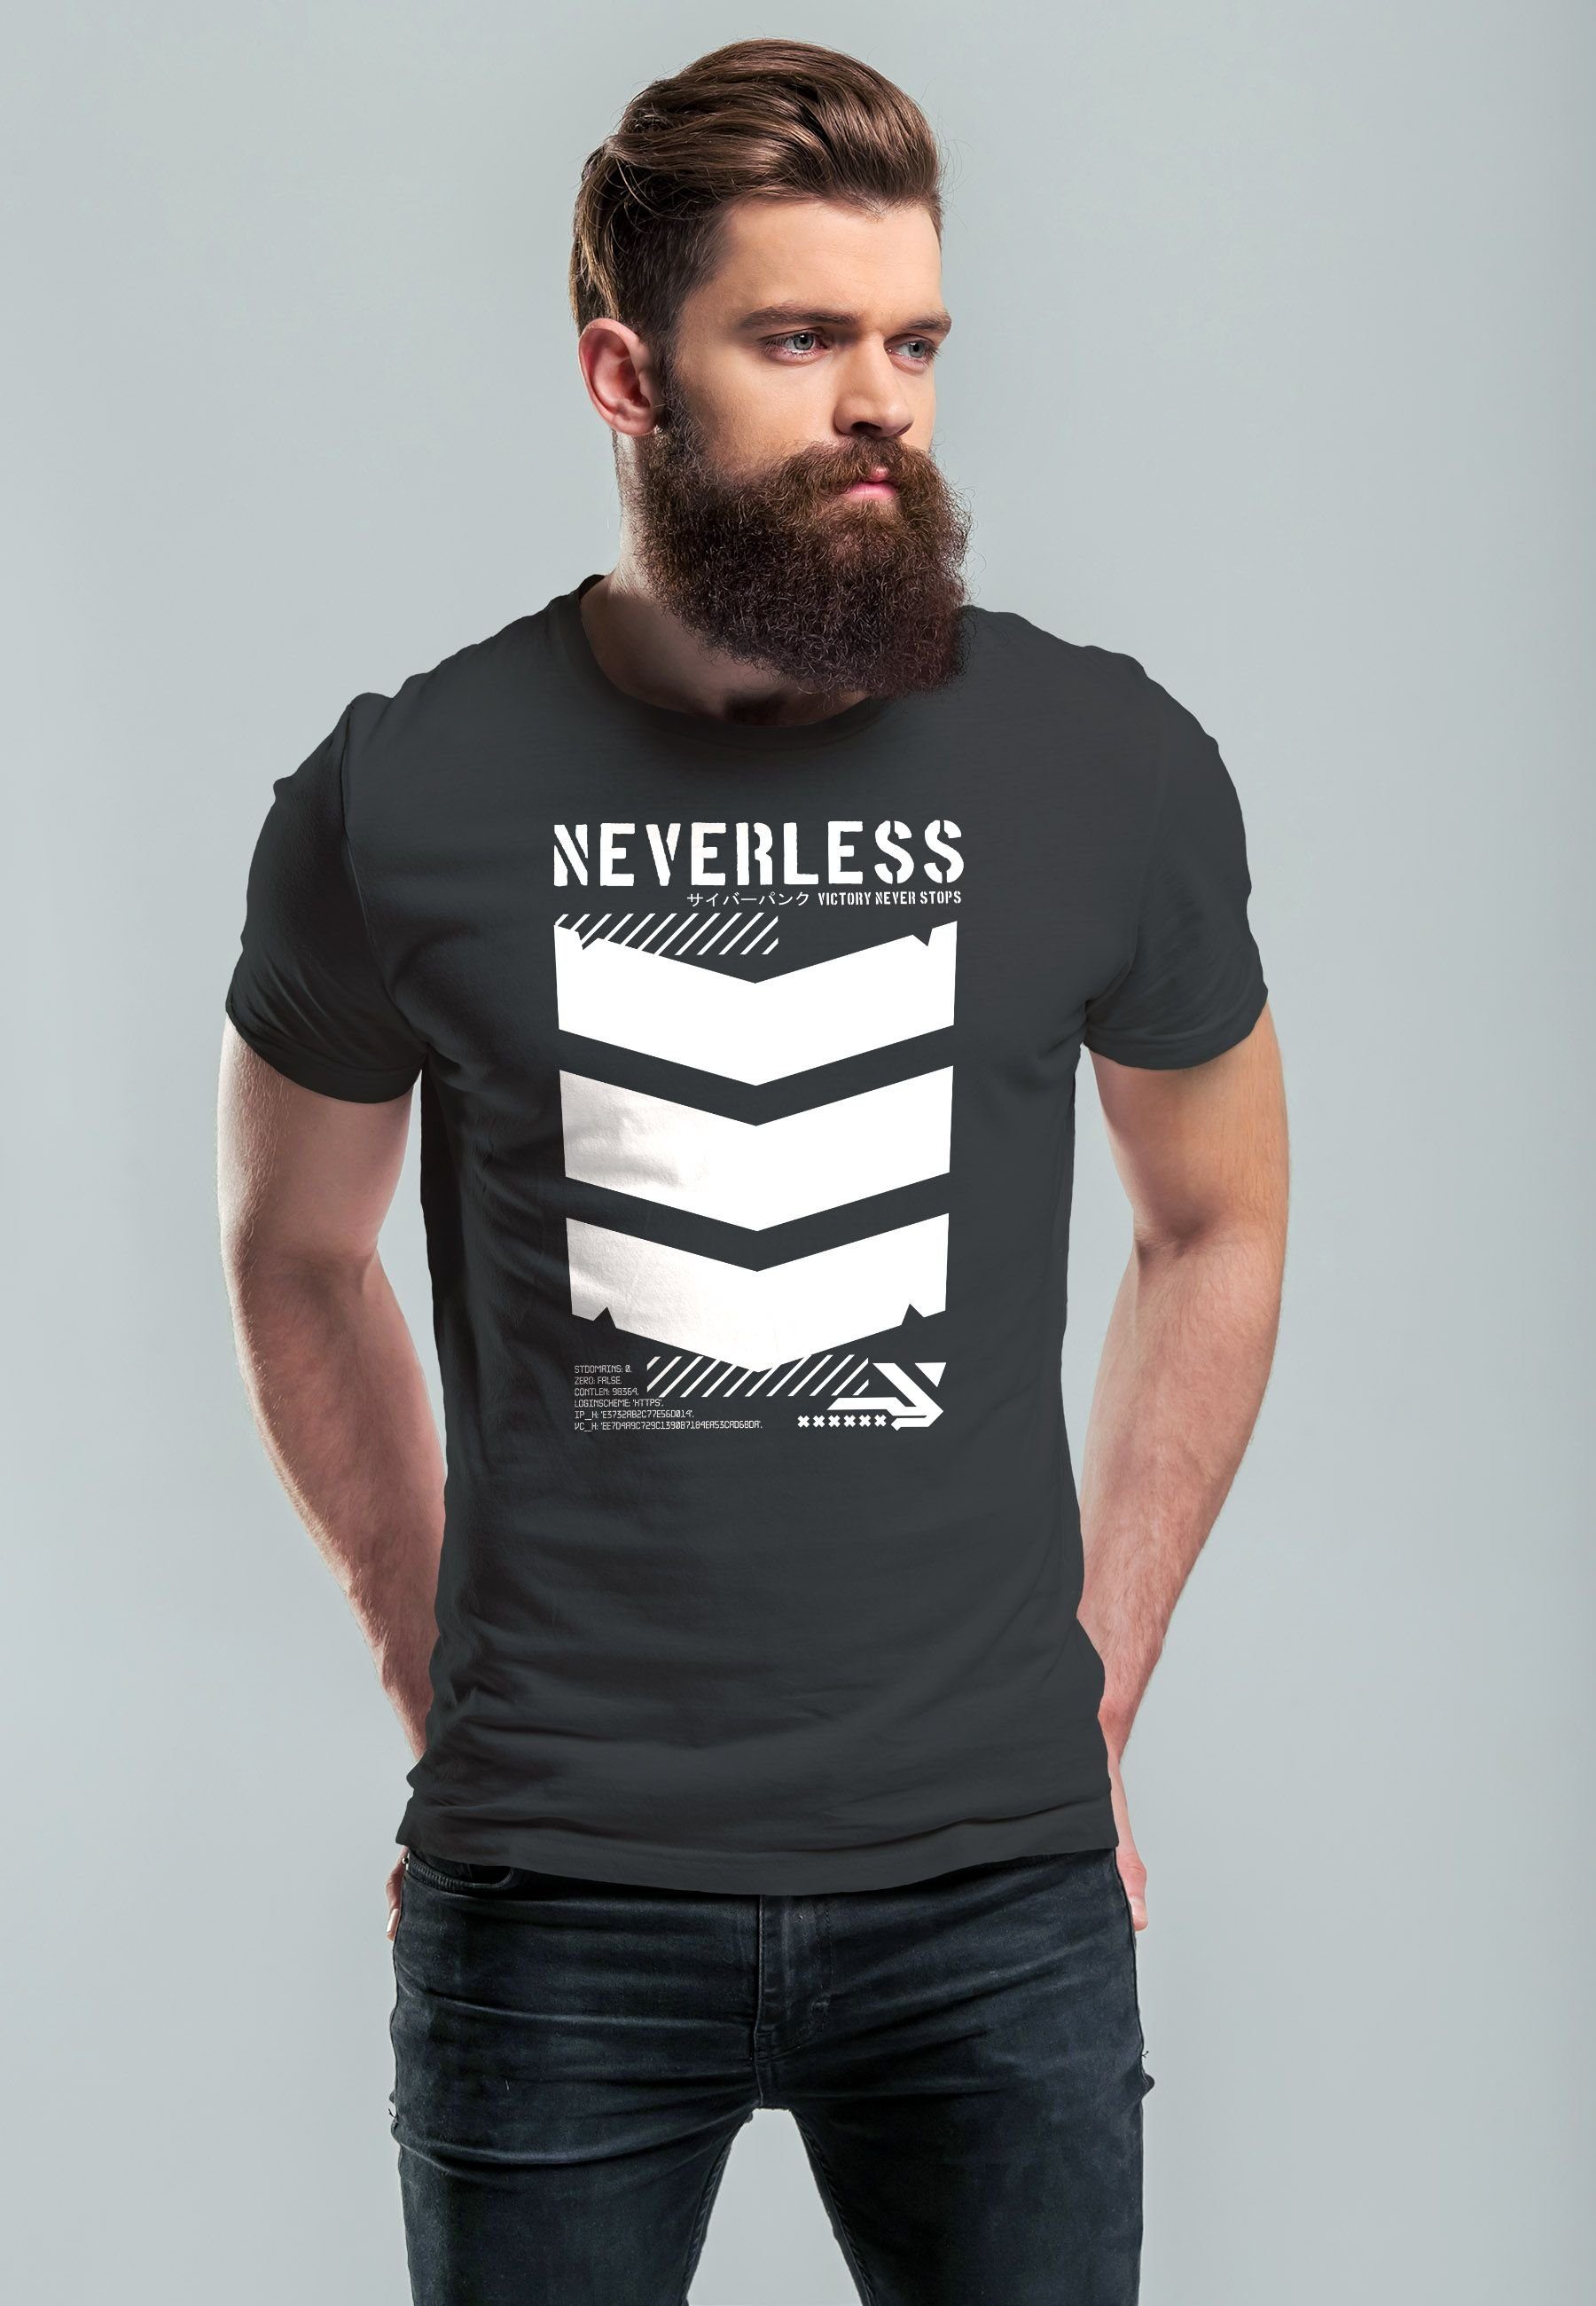 Neverless Print-Shirt Herren T-Shirt Techwear Military Streetstyle mit Motive Trend dunkelgrau Print Japanese Fas